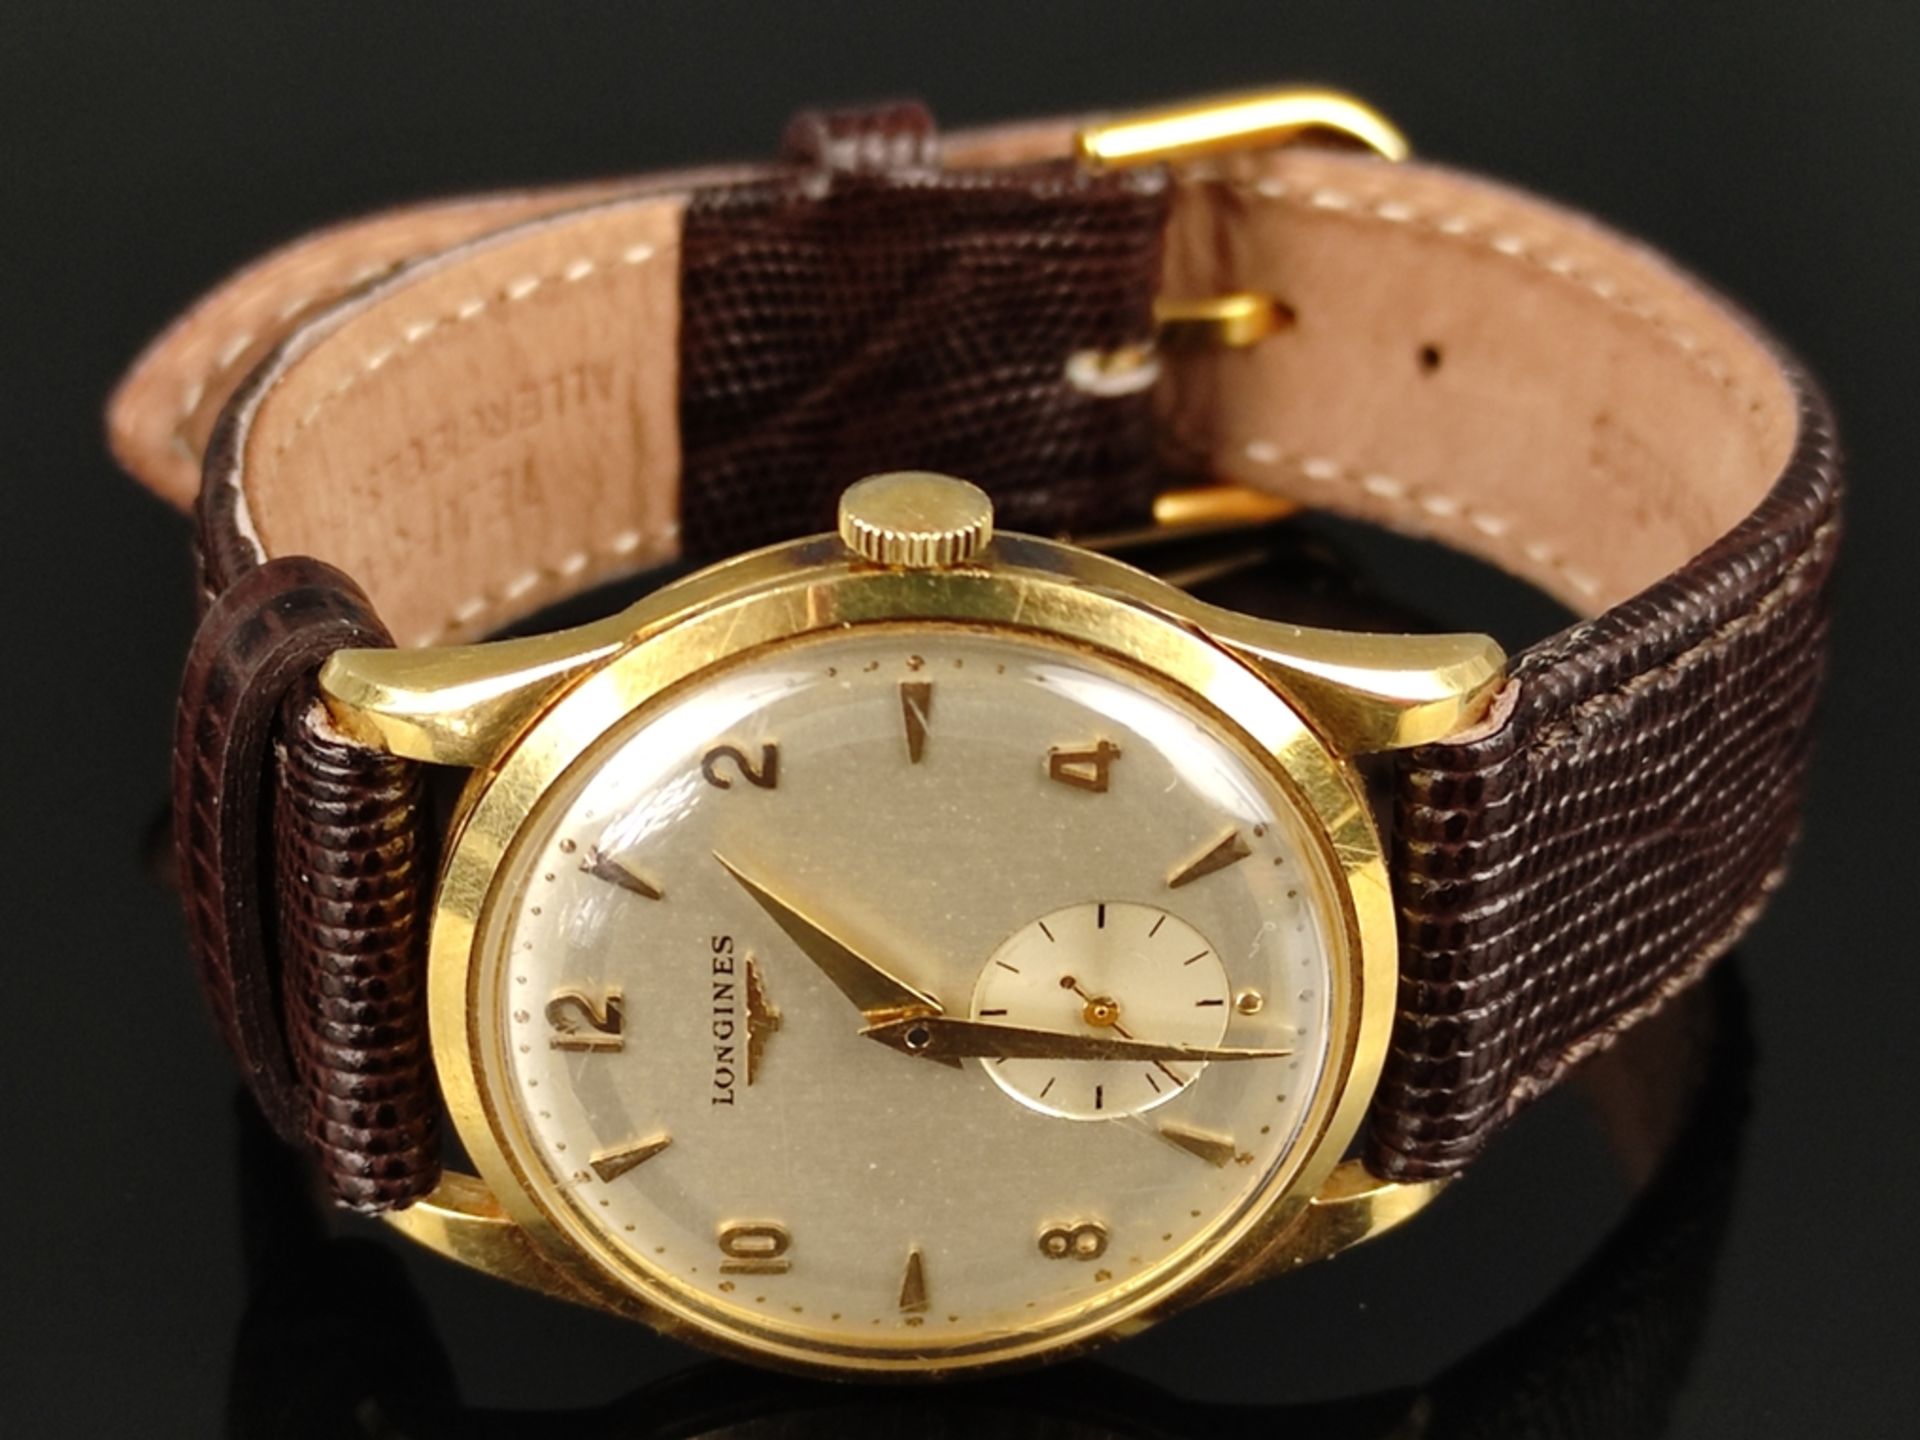 Wristwatch, Longines Calatrava, 8878651 caliber 23Z, 750/18K gold case, clock face with gold indice - Image 2 of 5